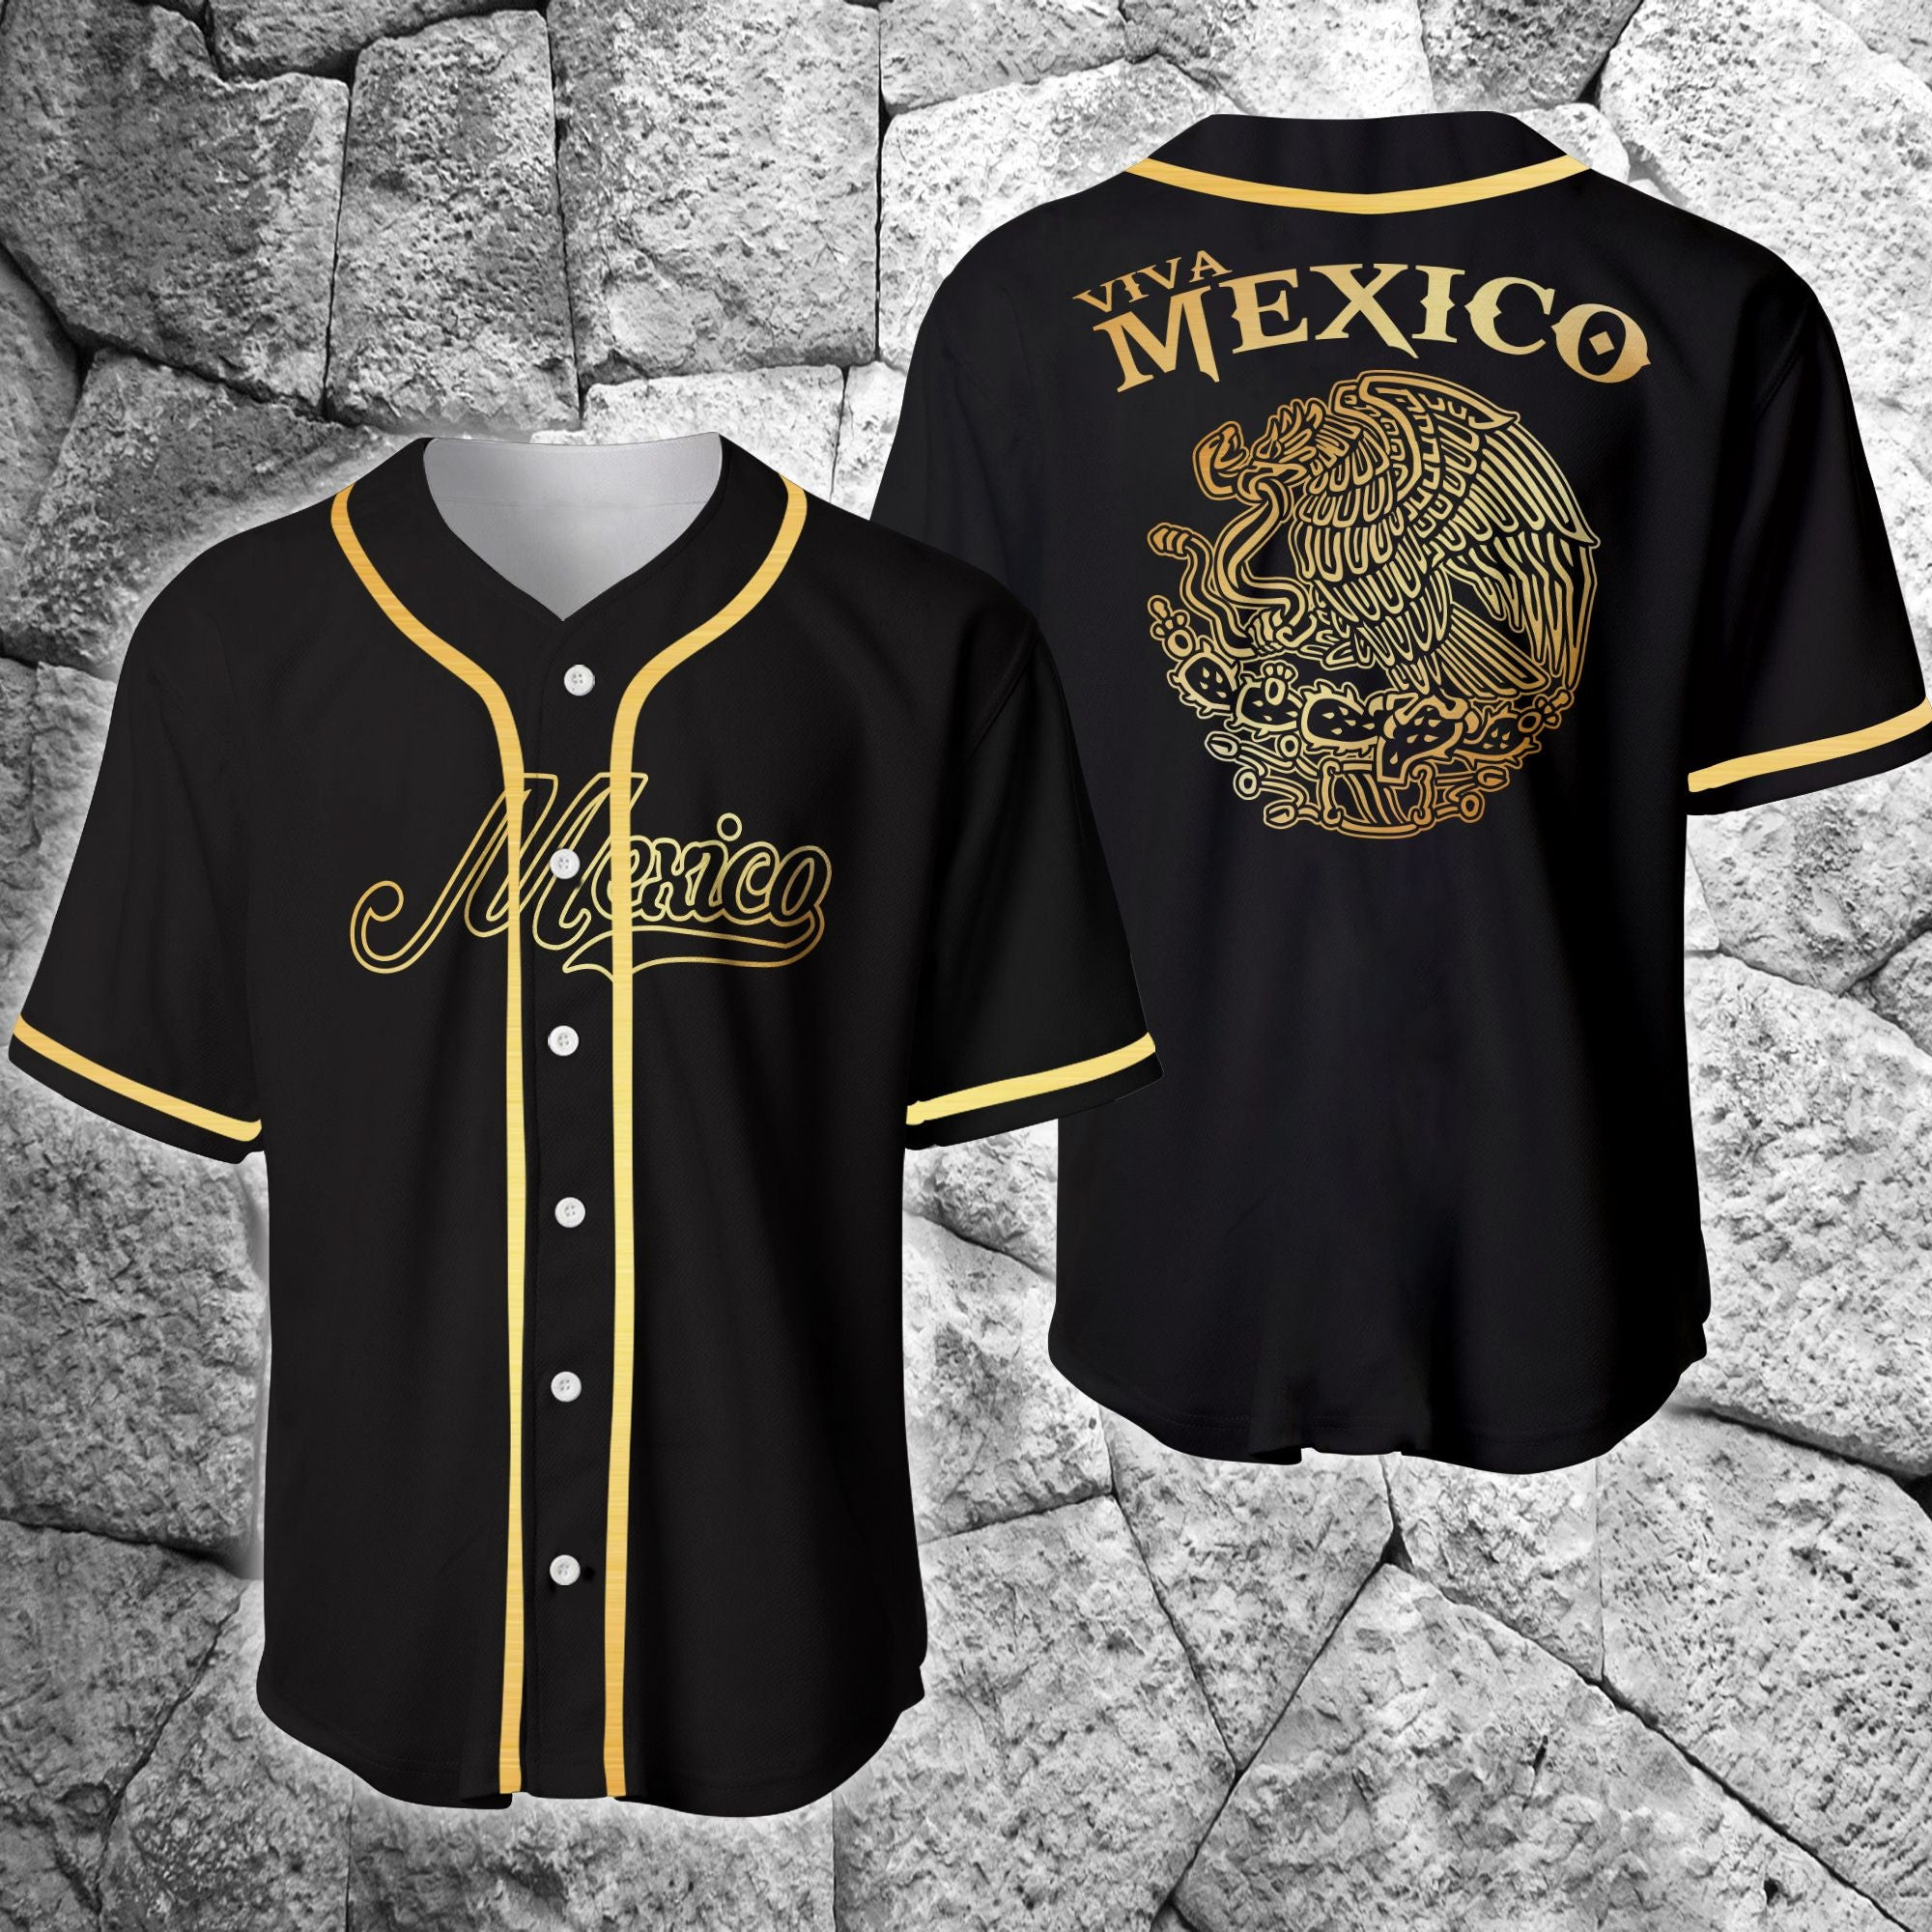 Mexico Gold Eagle Baseball Jersey, Unisex Jersey Shirt for Men Women